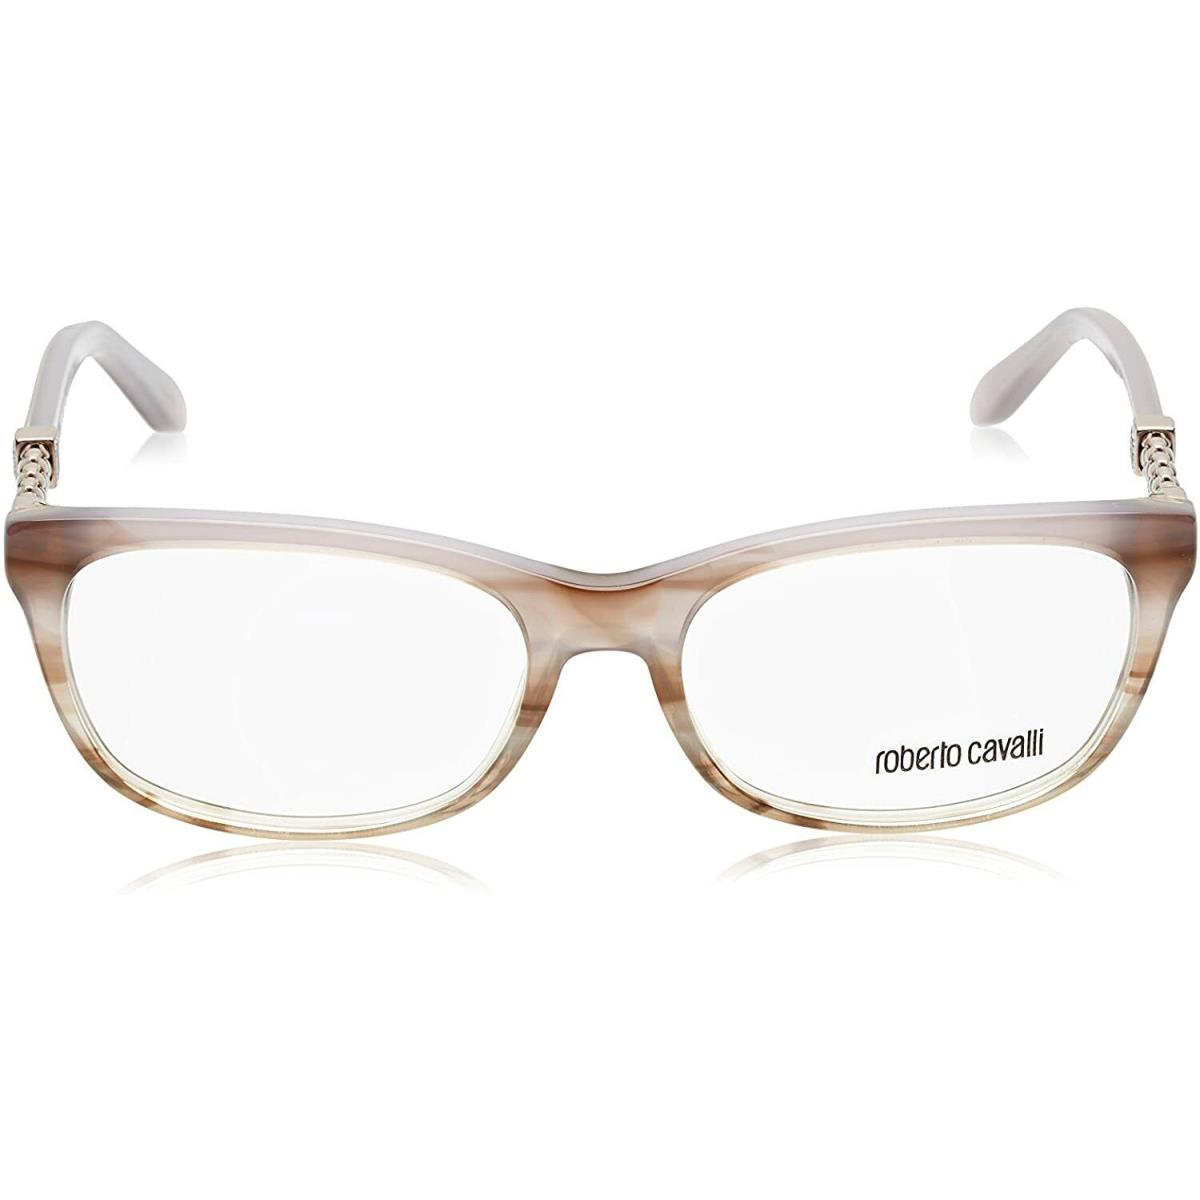 Roberto Cavalli Barbados RC706 059 Beige Brown Mix Eyeglasses Frame 54-16-140